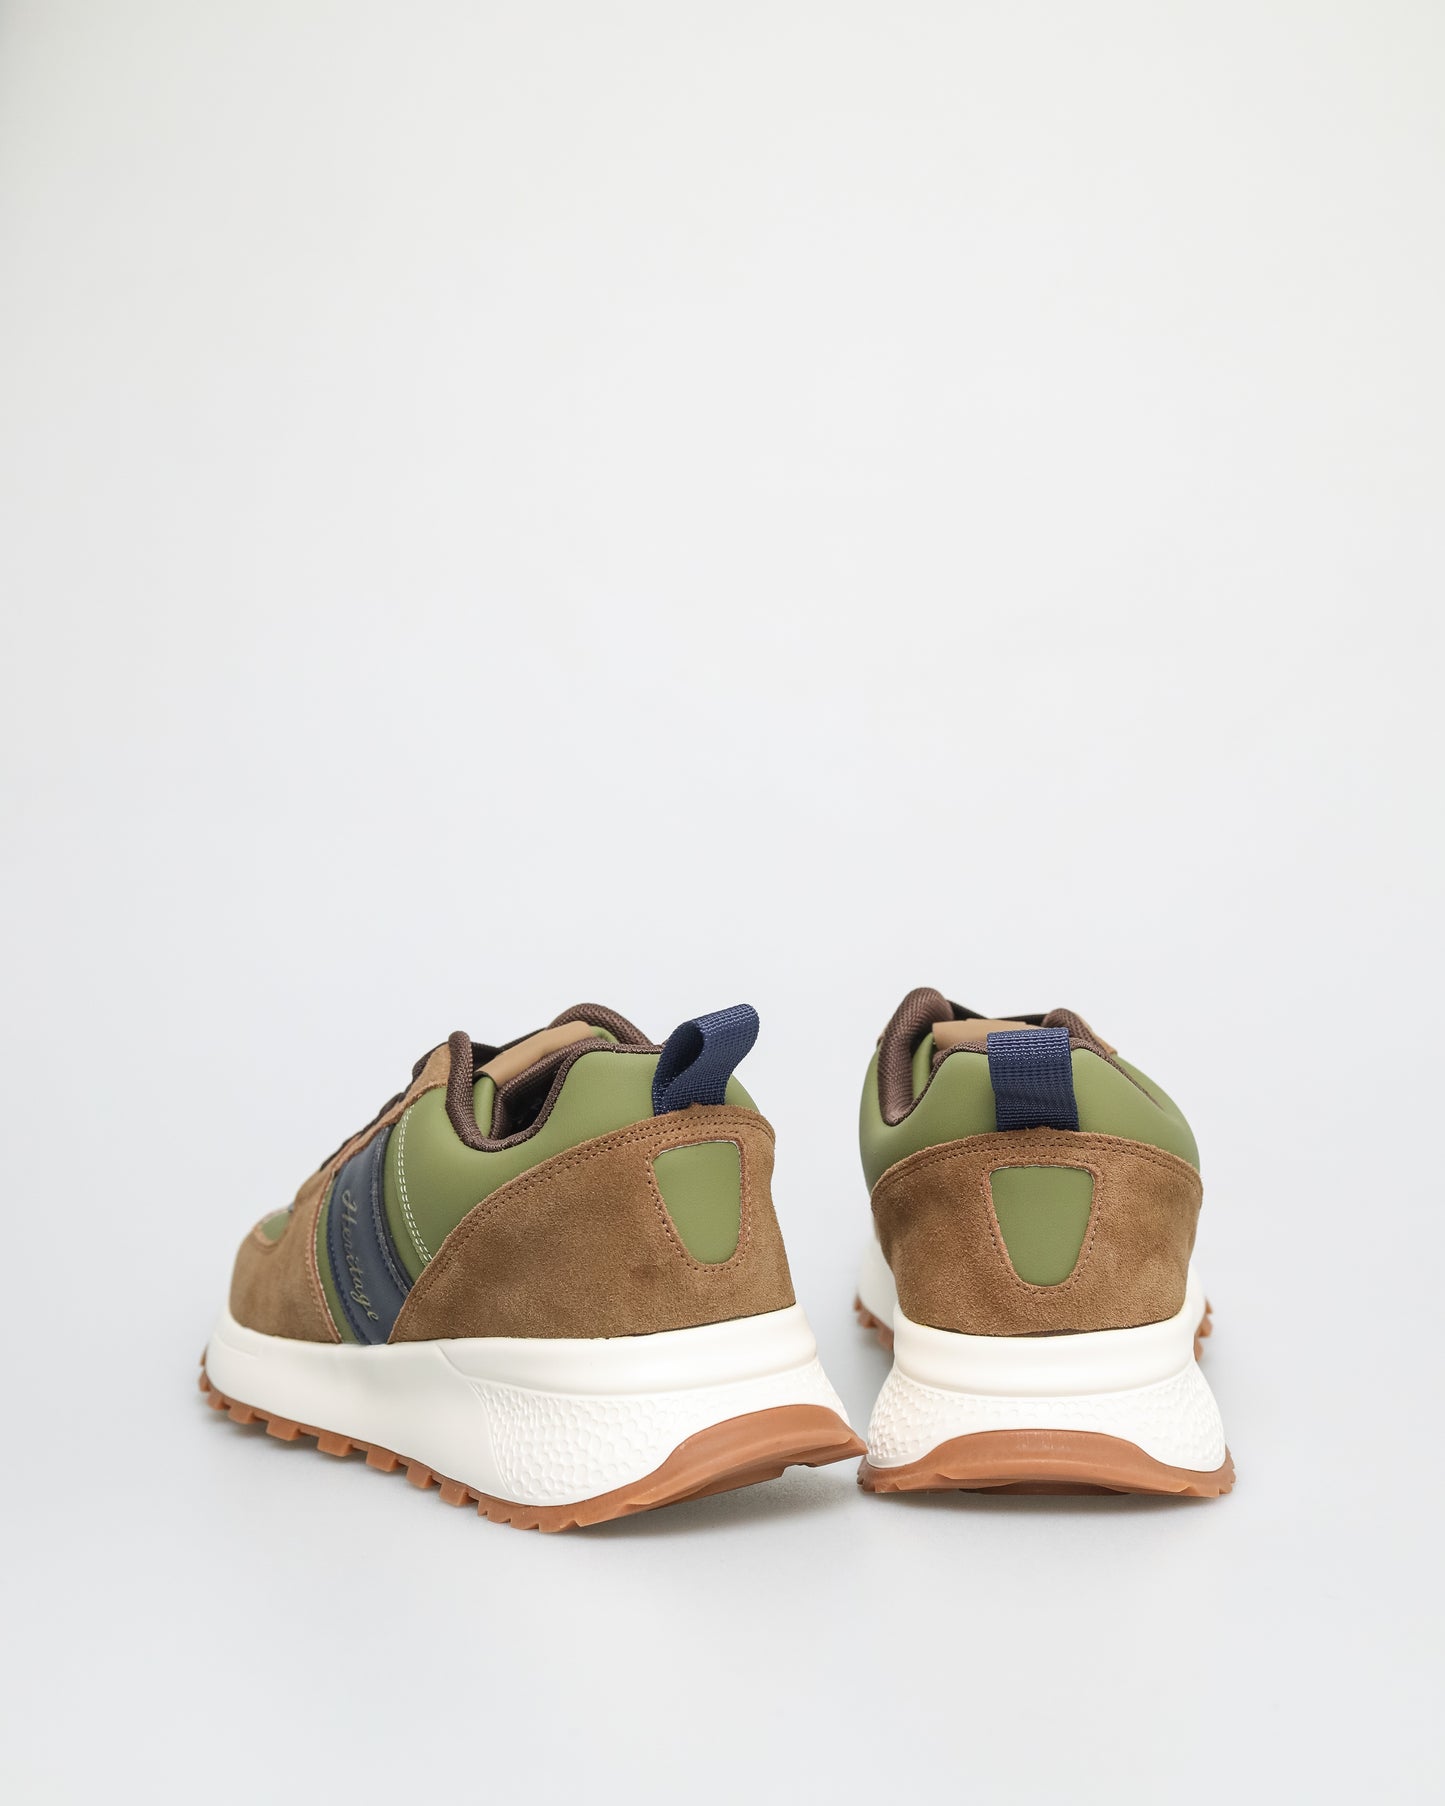 Tomaz TY021 Men's Sneakers (Khaki/Green/Navy)